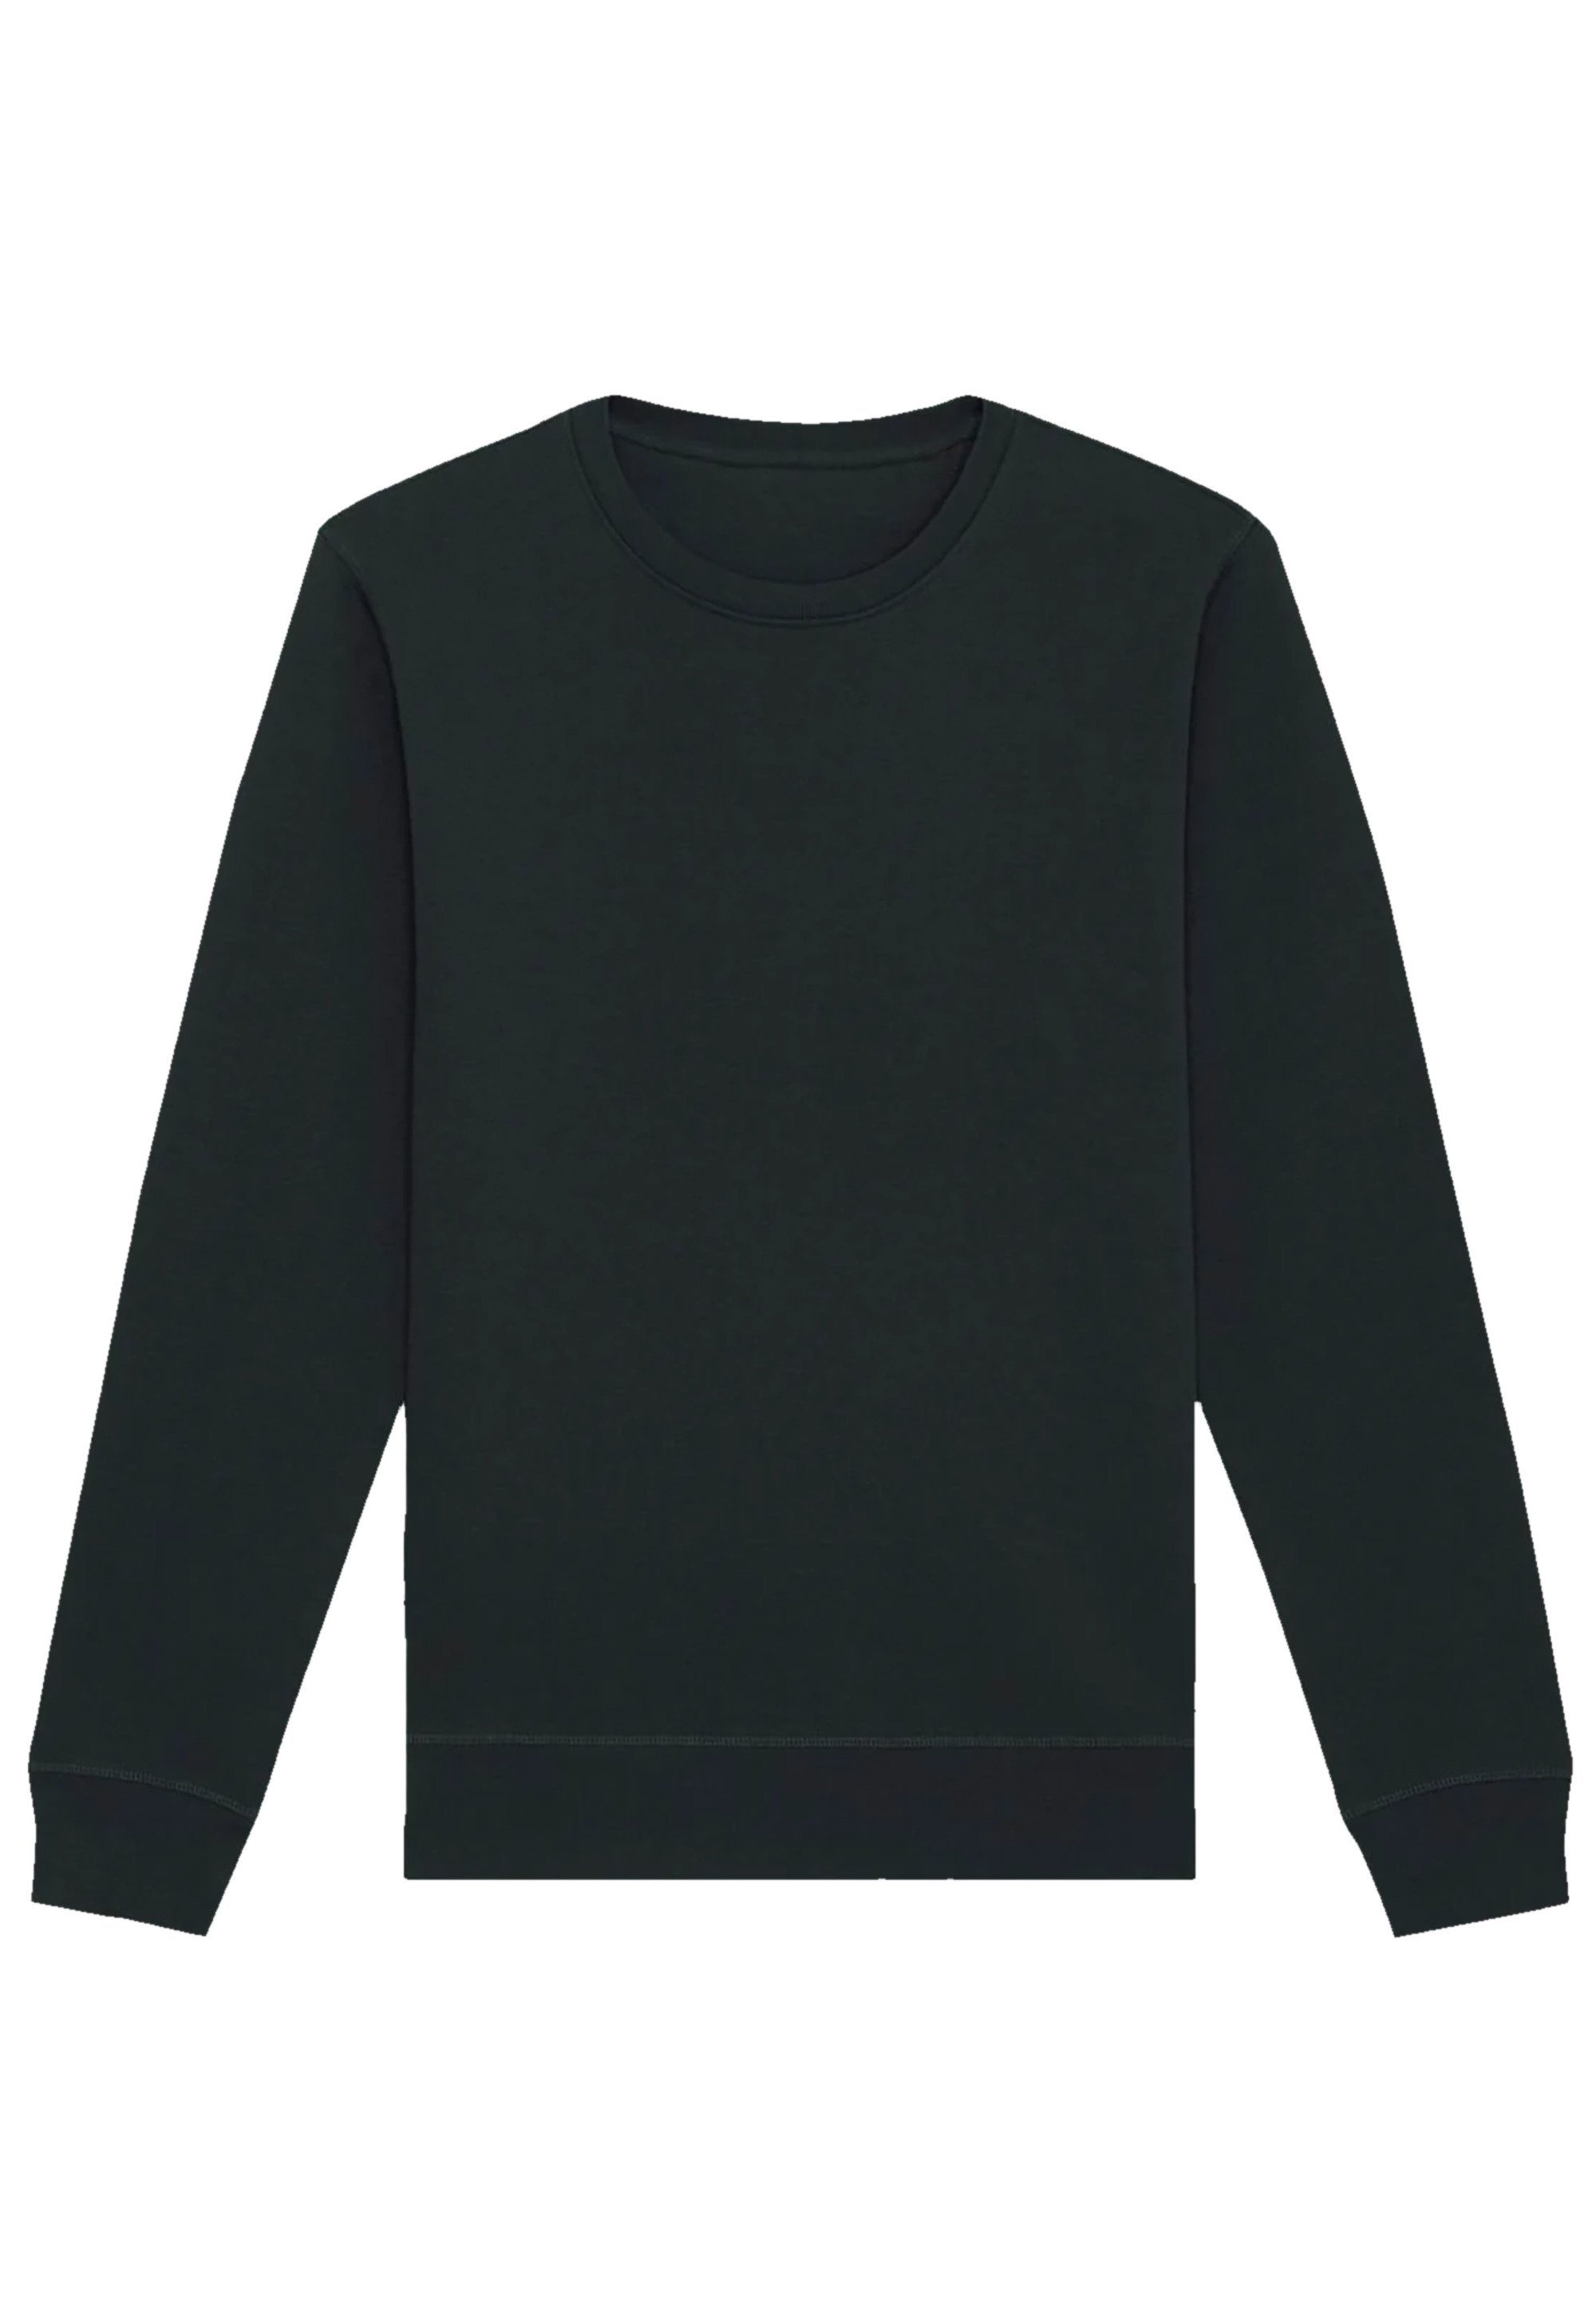 Japan Sweatshirt Print Kanagawa F4NT4STIC Welle schwarz